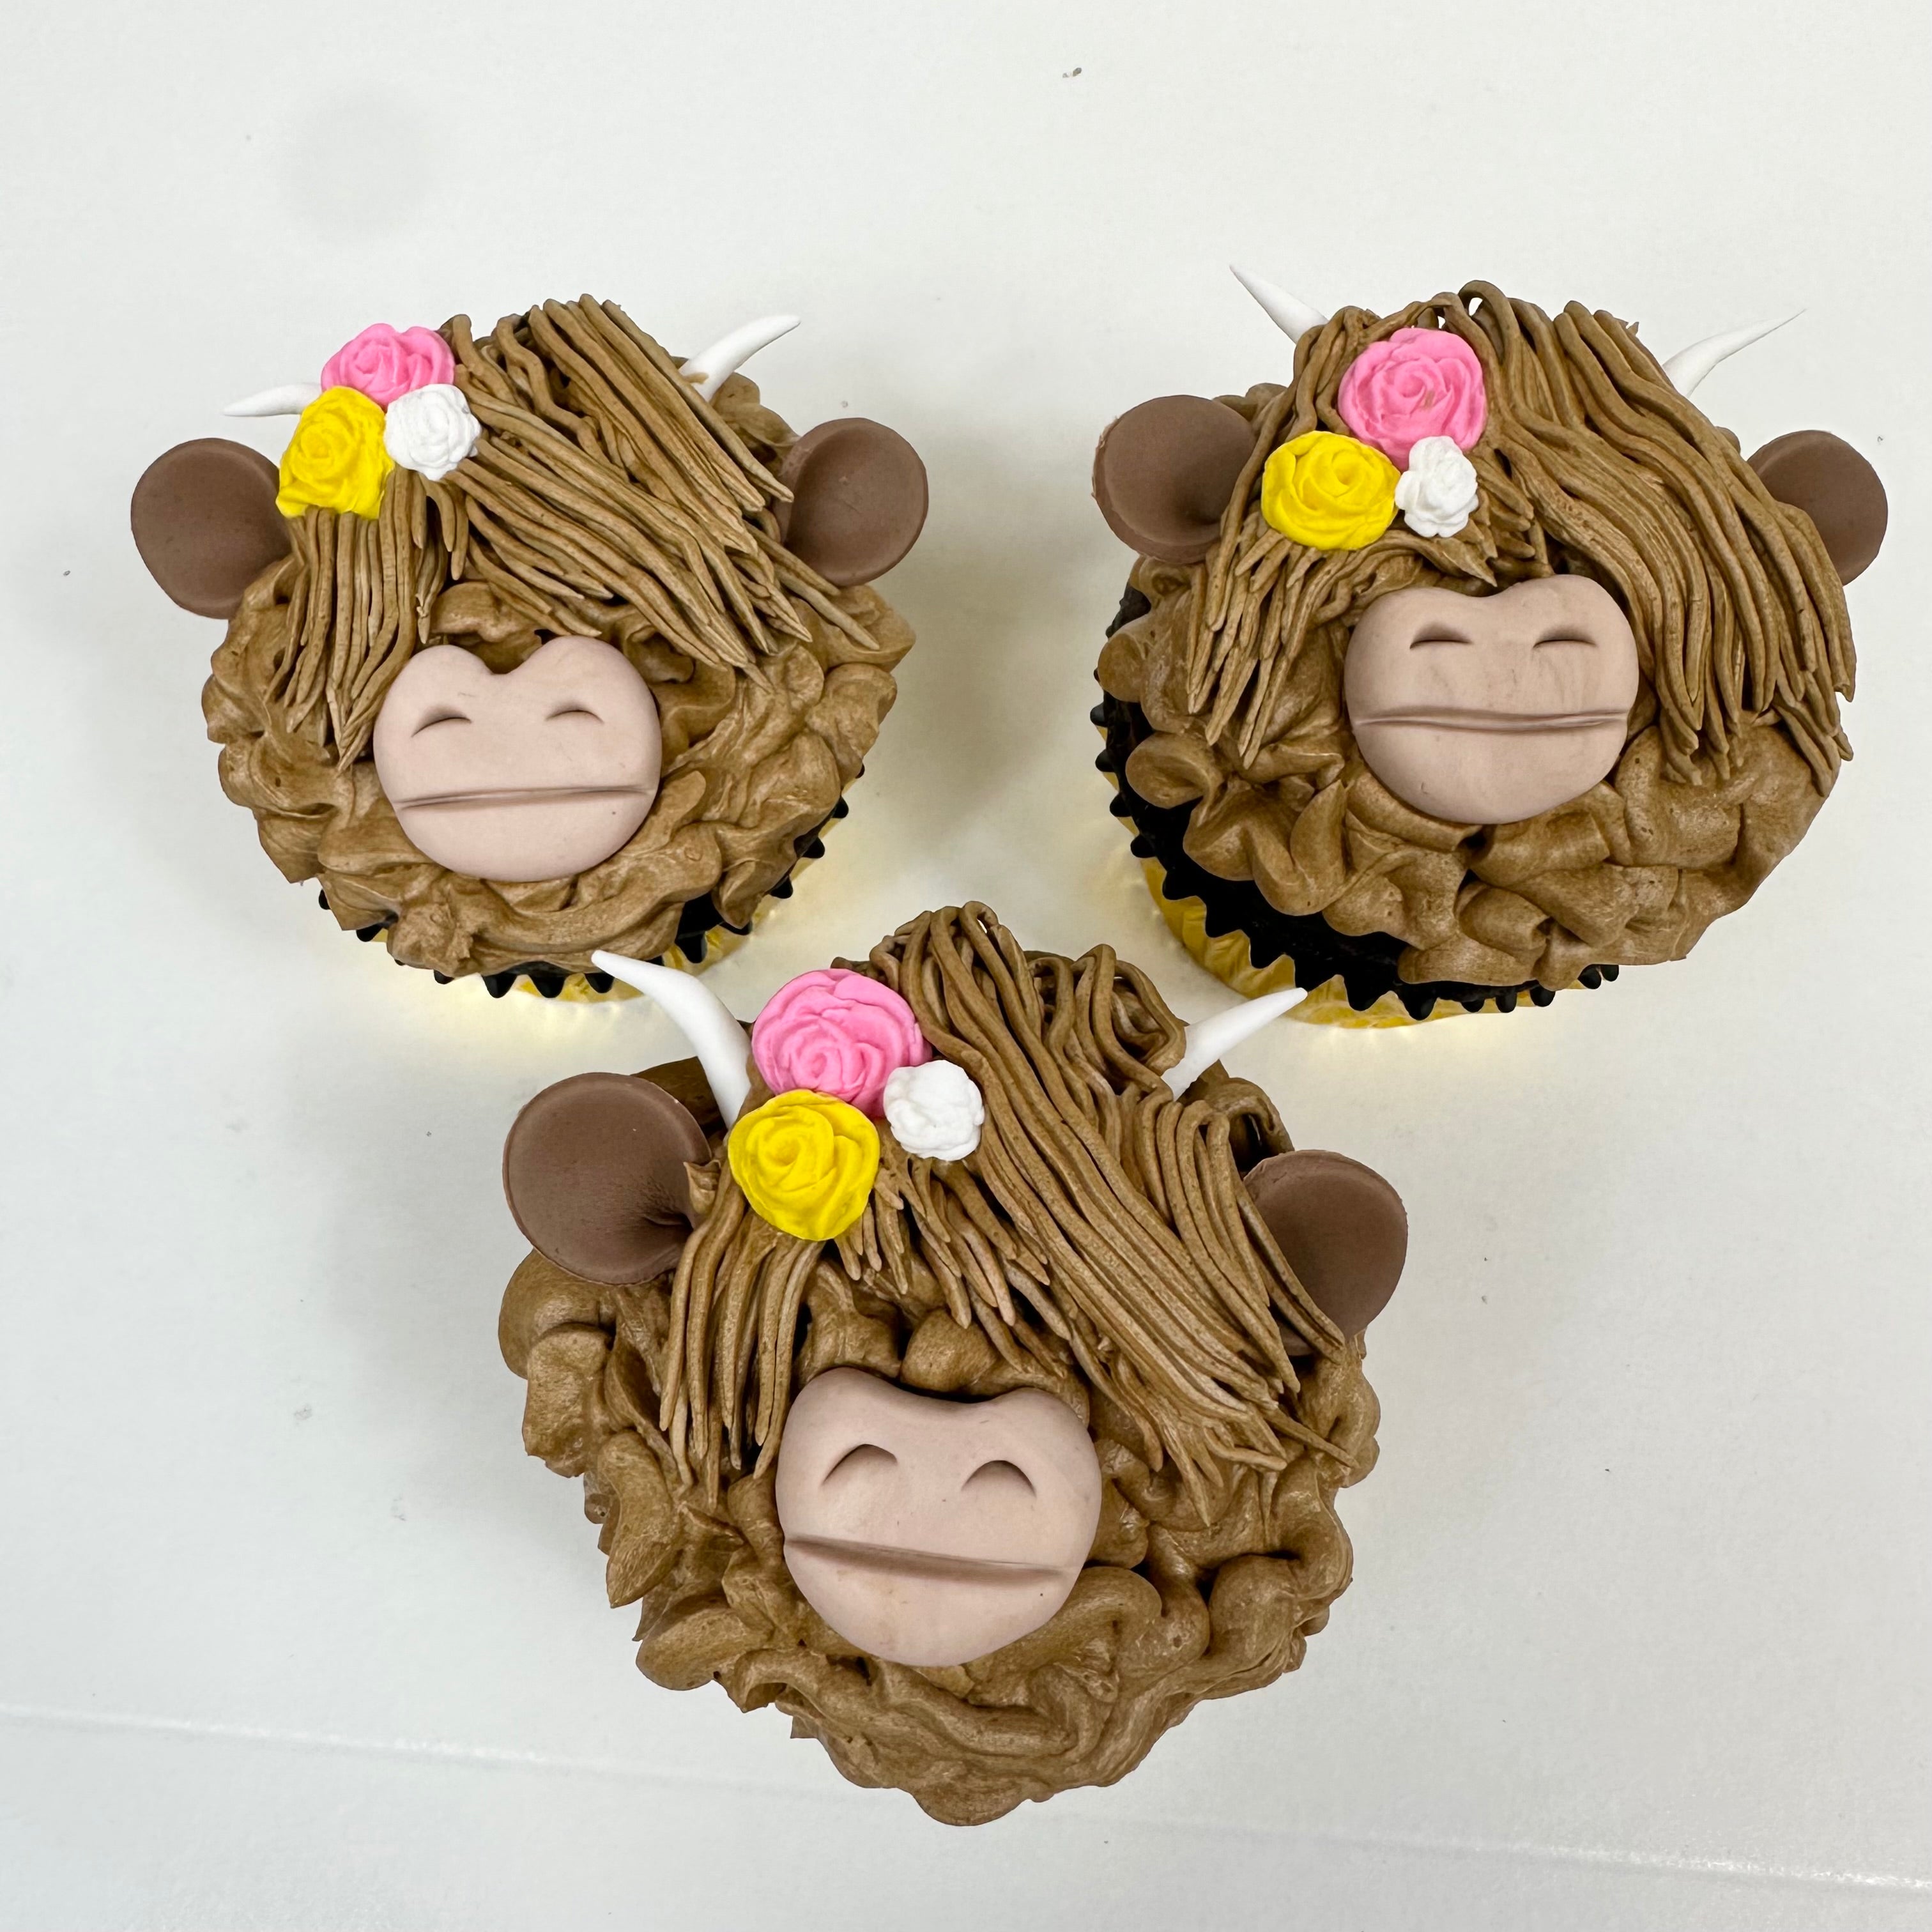 Highland Cow Cupcakes